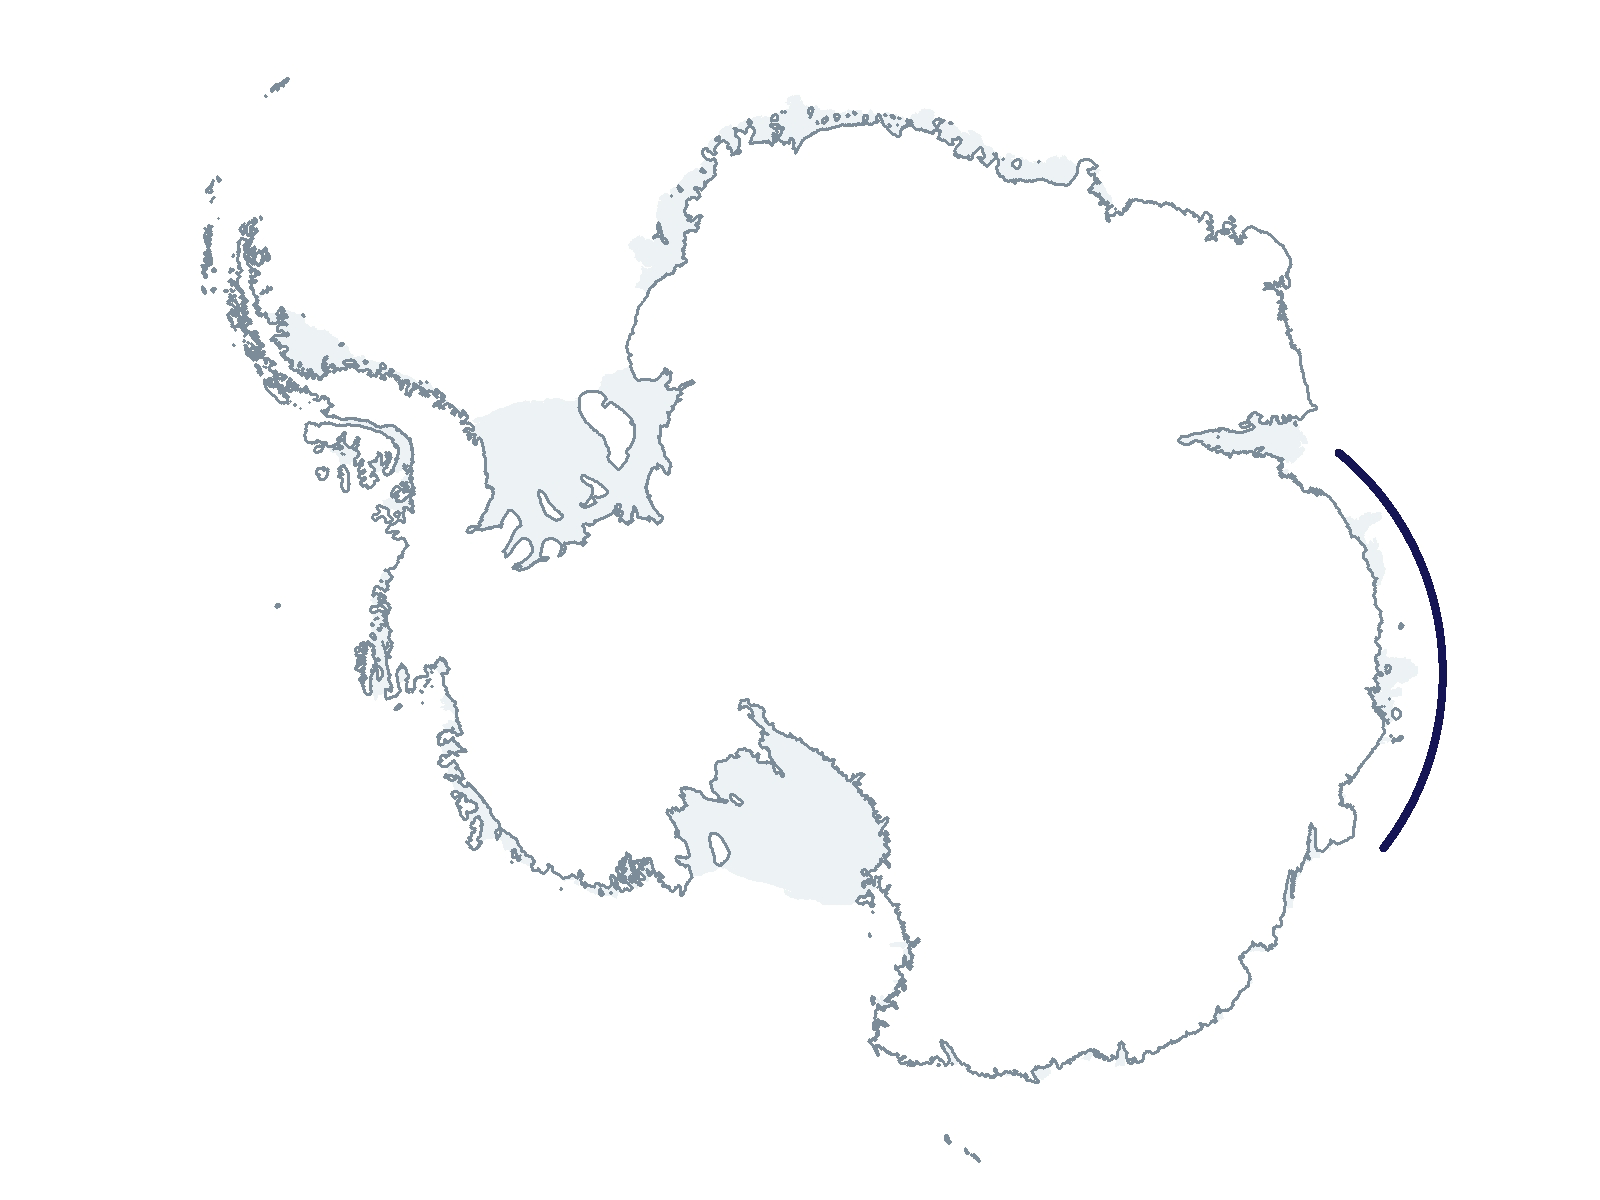 B-237-L/N Research Location(s): Eastern Antarctica - Prydz Bay